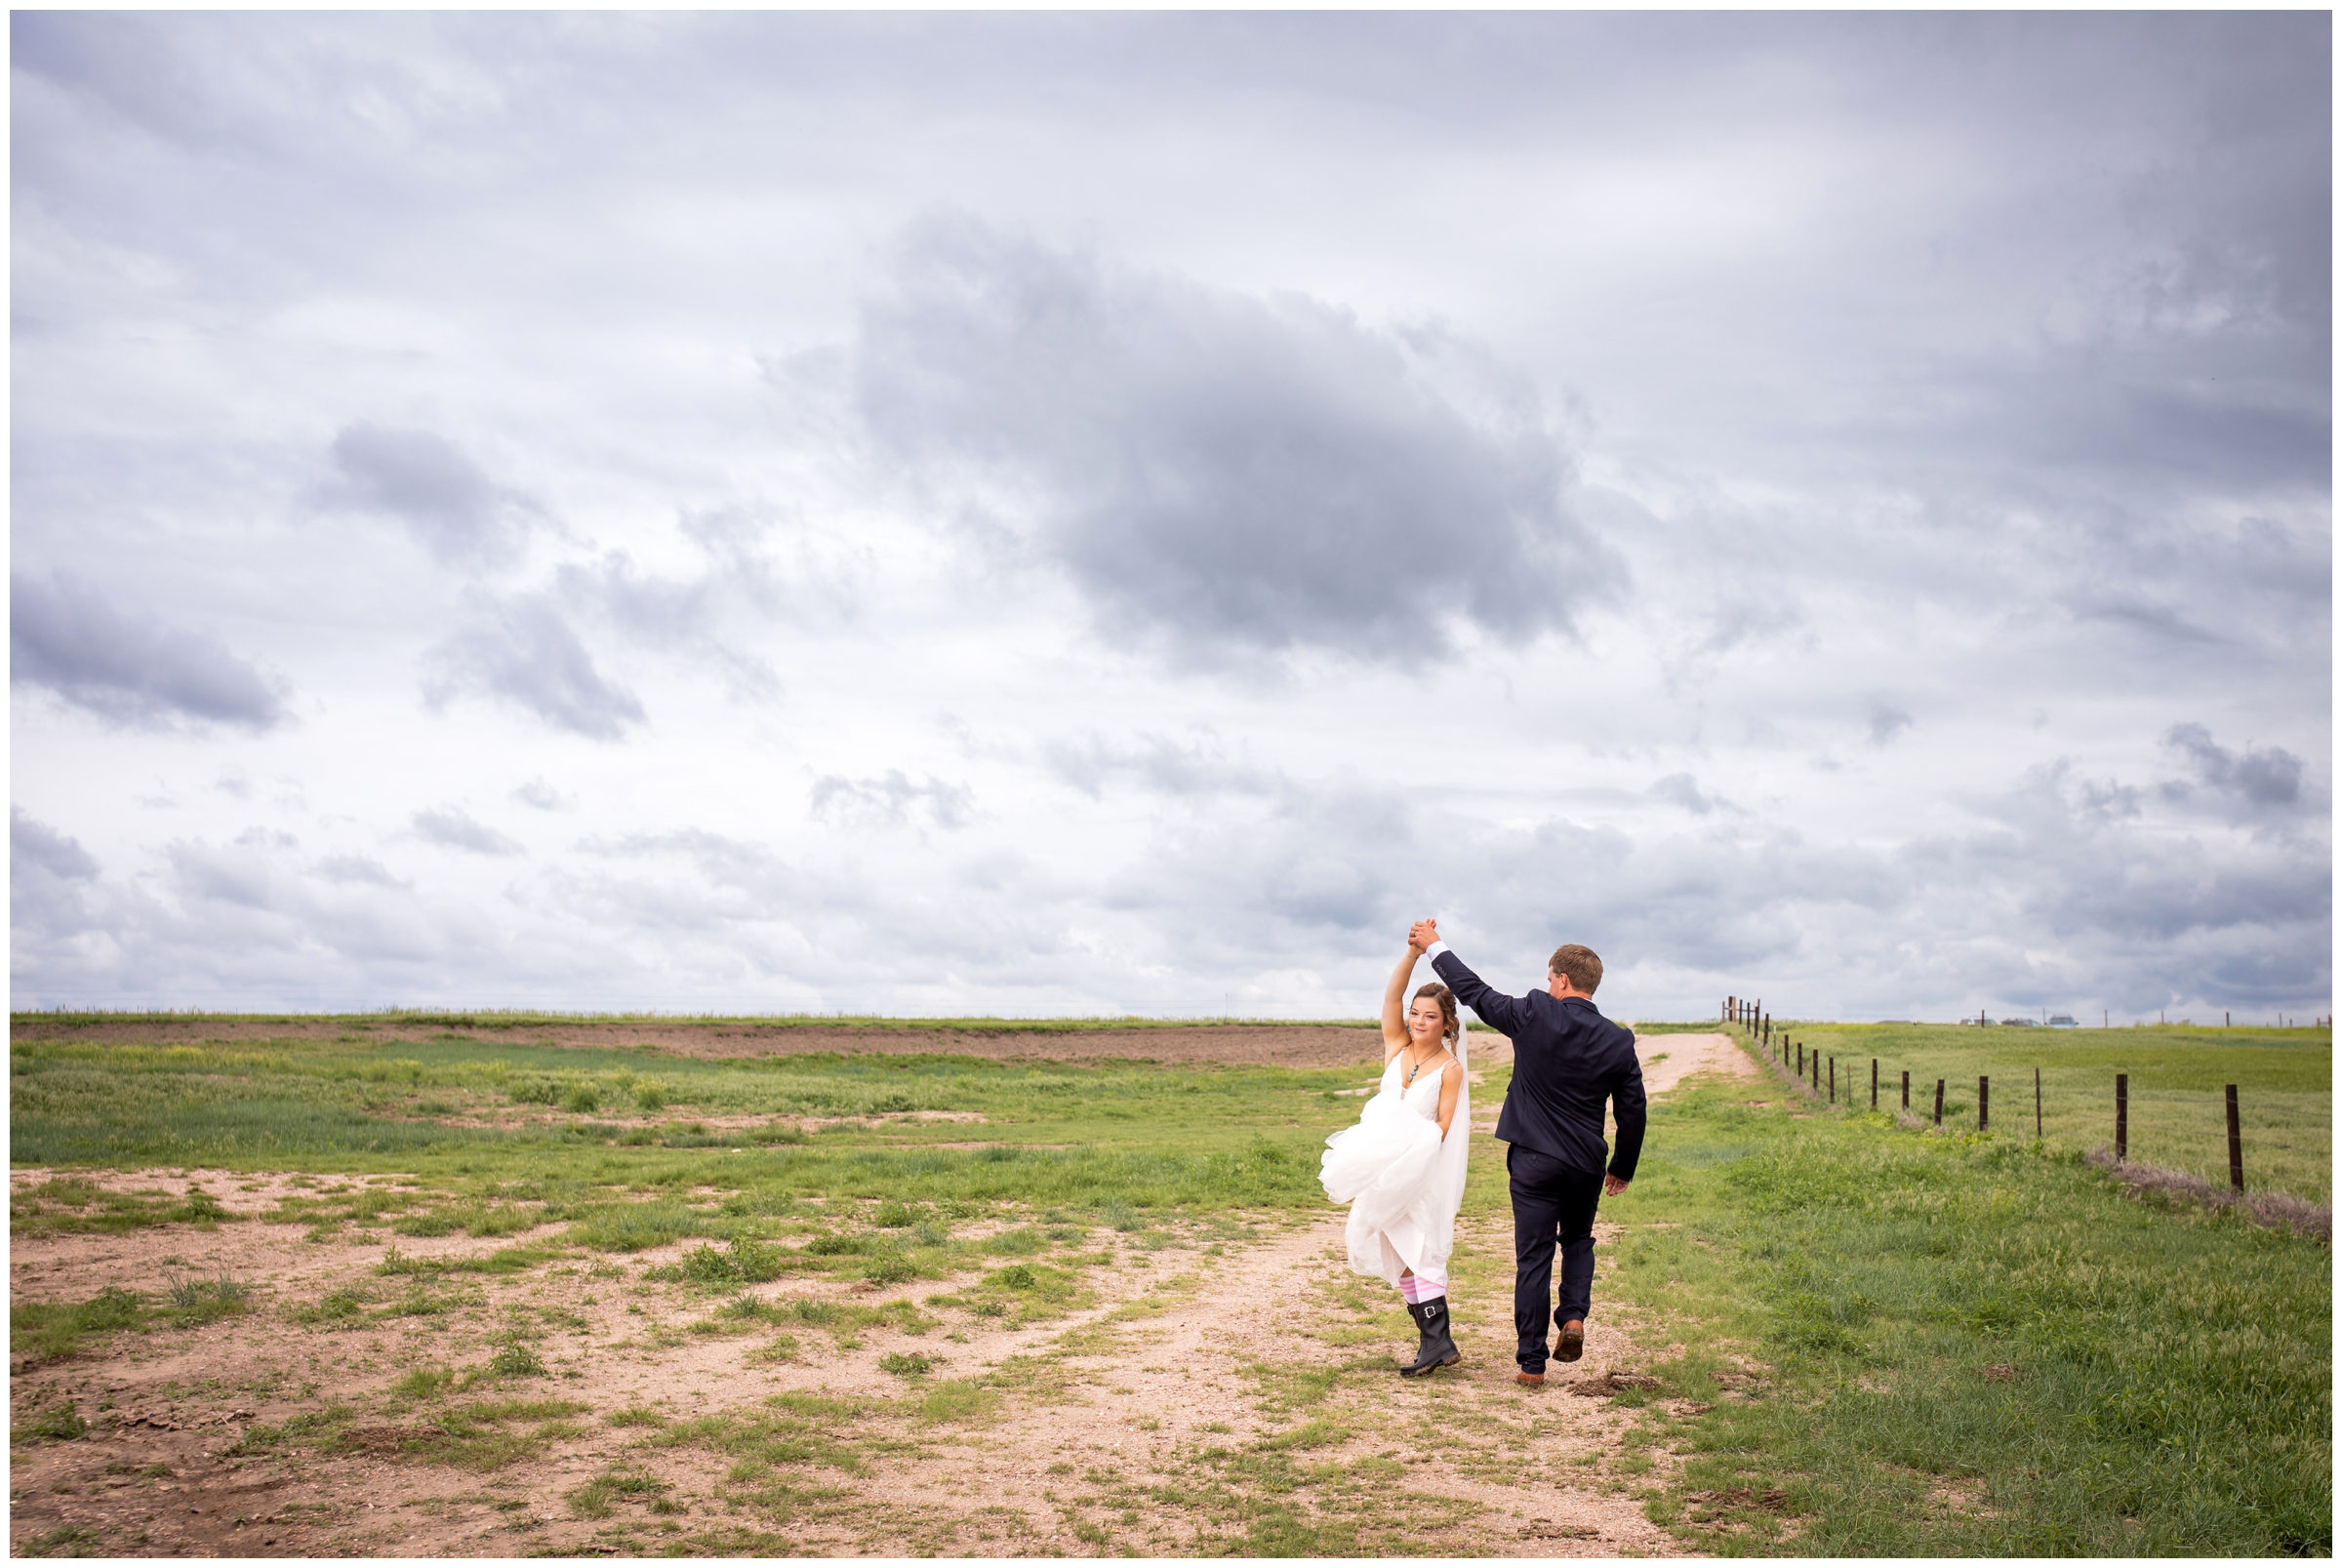 couple walking down dirt road during rustic farm wedding photos in Crook Colorado 